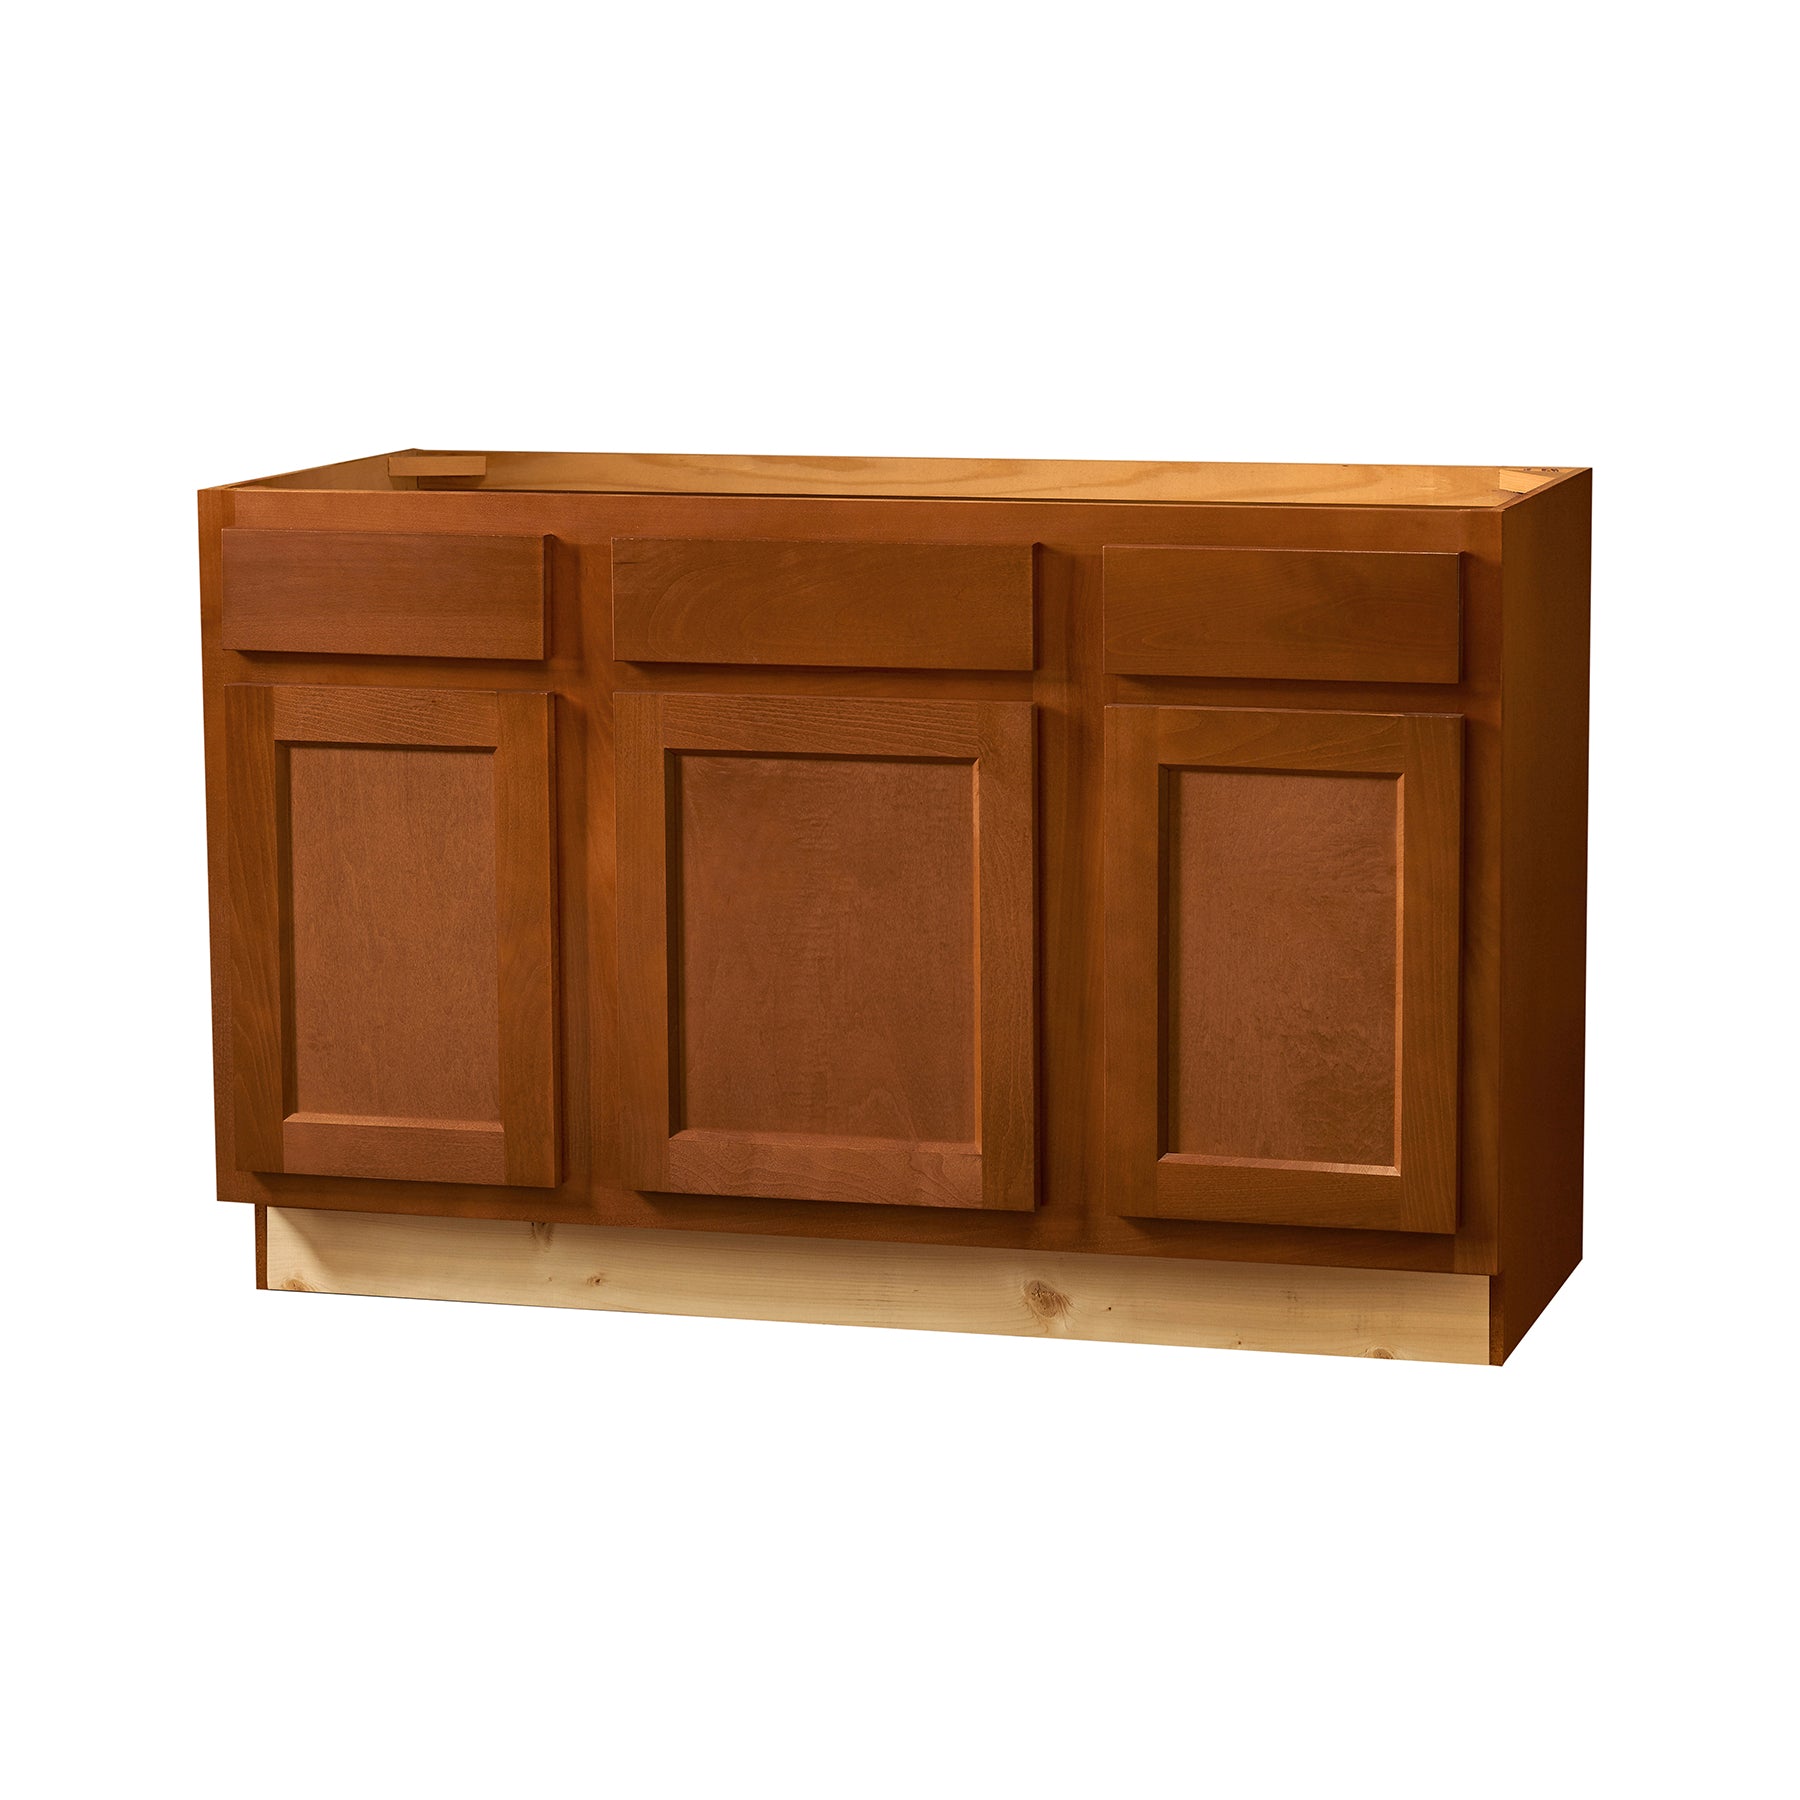 30.5 Inch High Vanity Cabinet - Glenwood Shaker - 48 Inch W x 30.5 Inch H x 21 Inch D